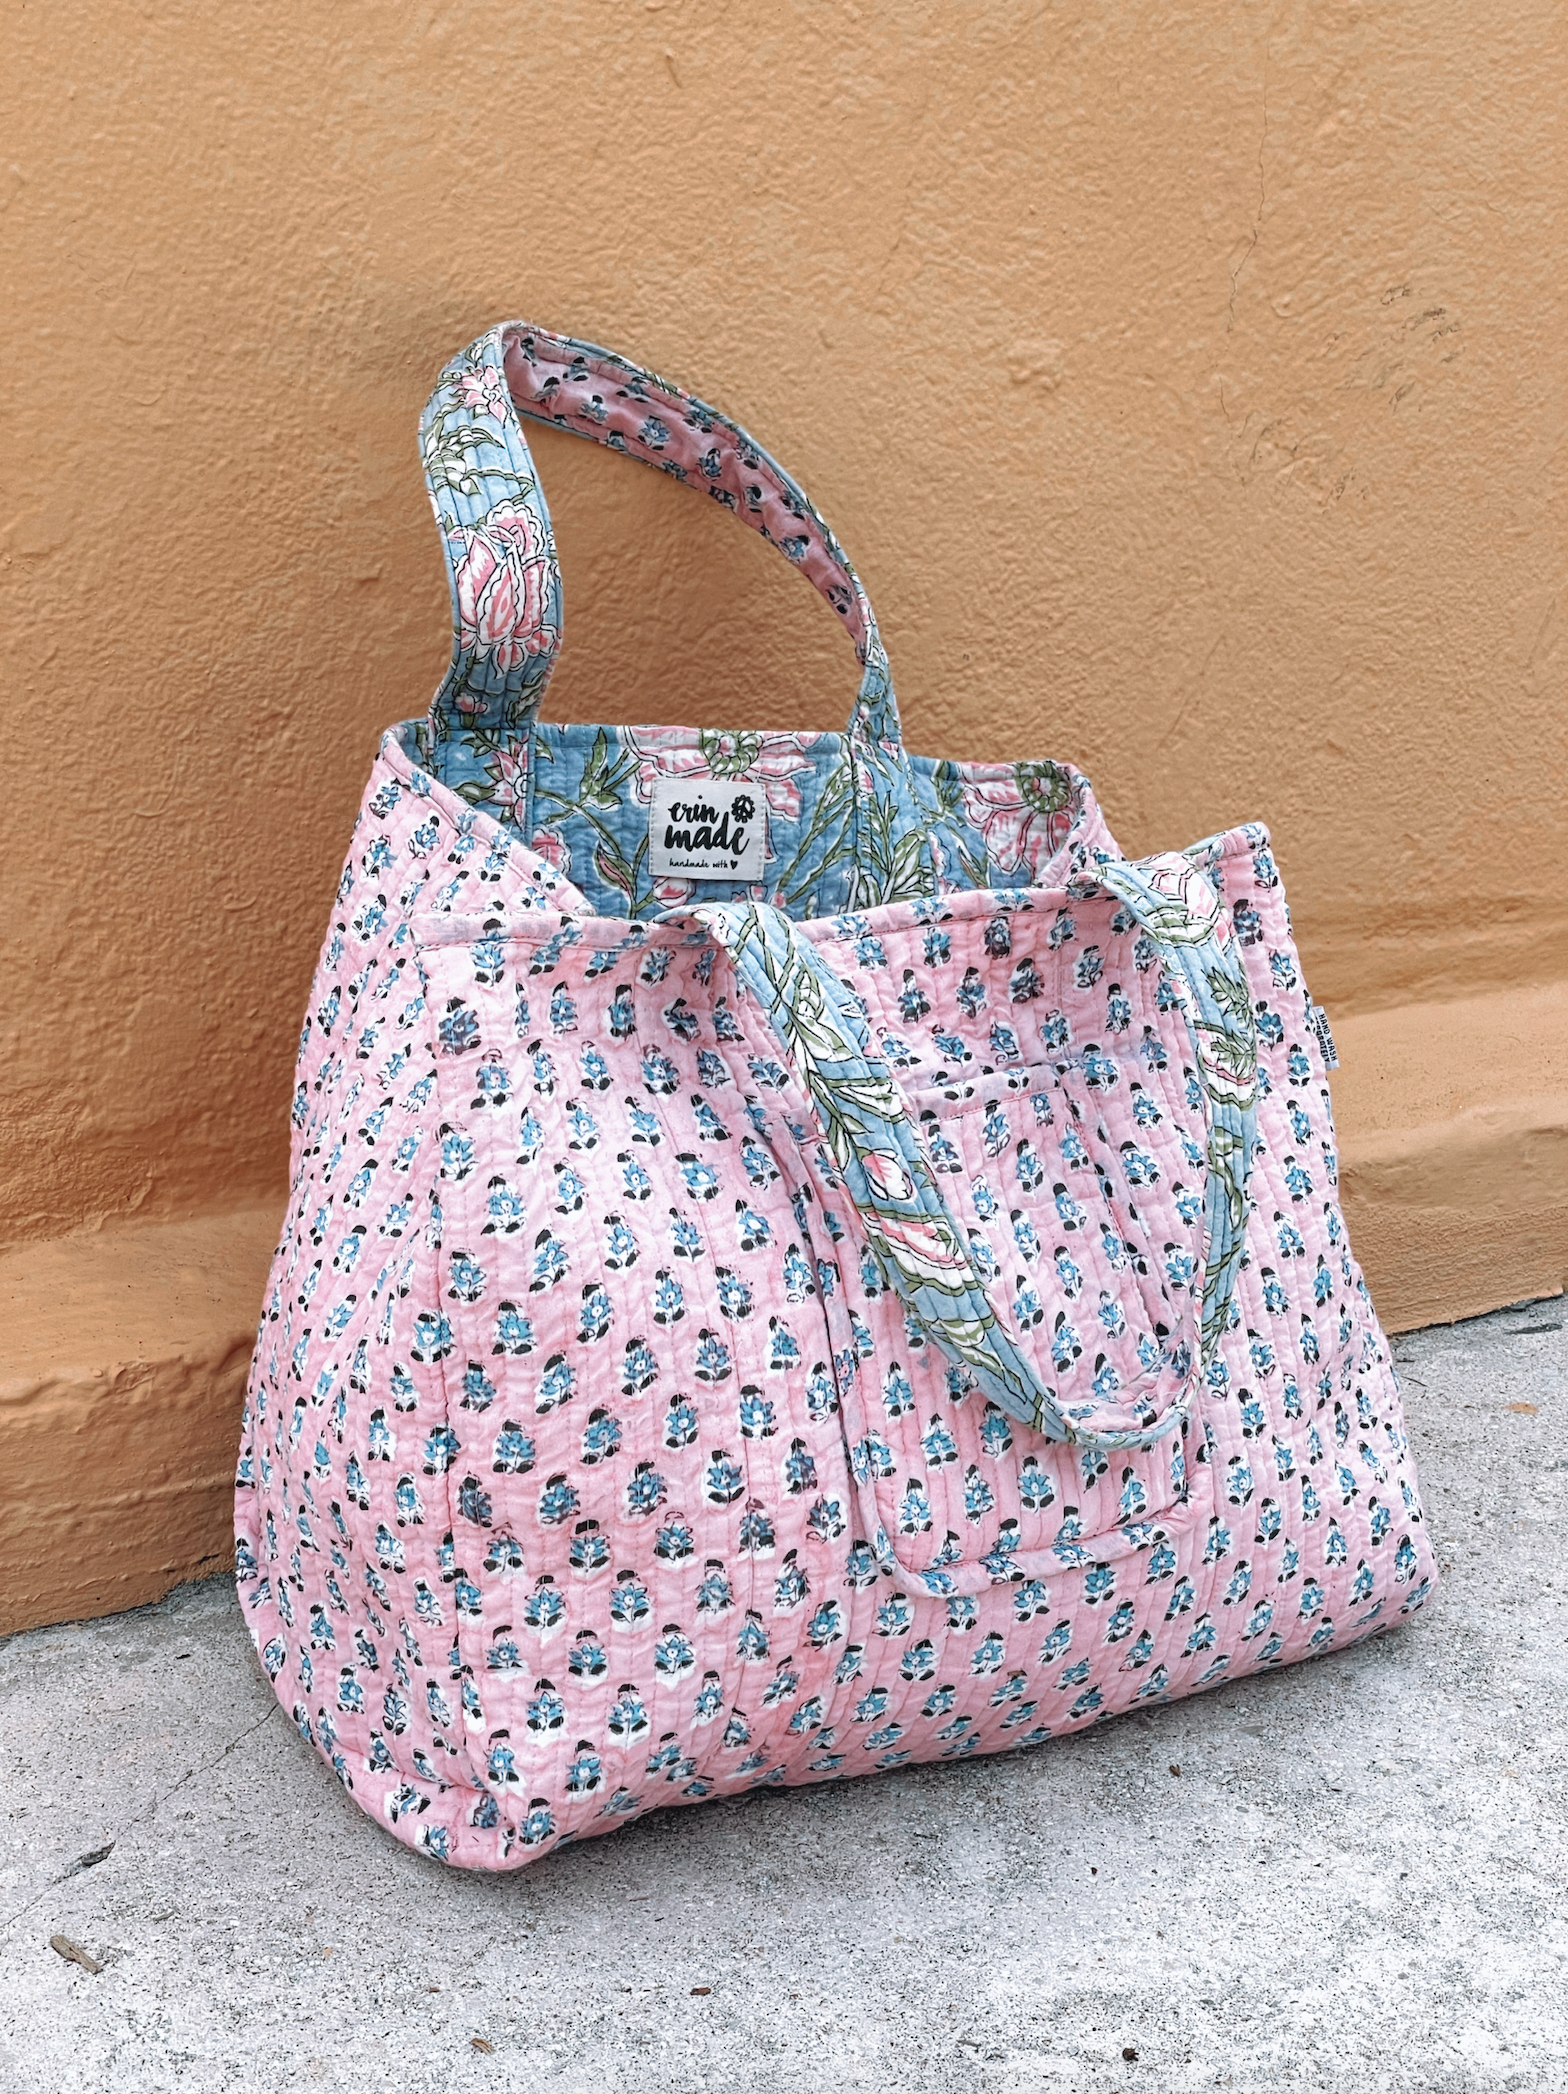 Coral Red Velvet Reversible Tote Bag